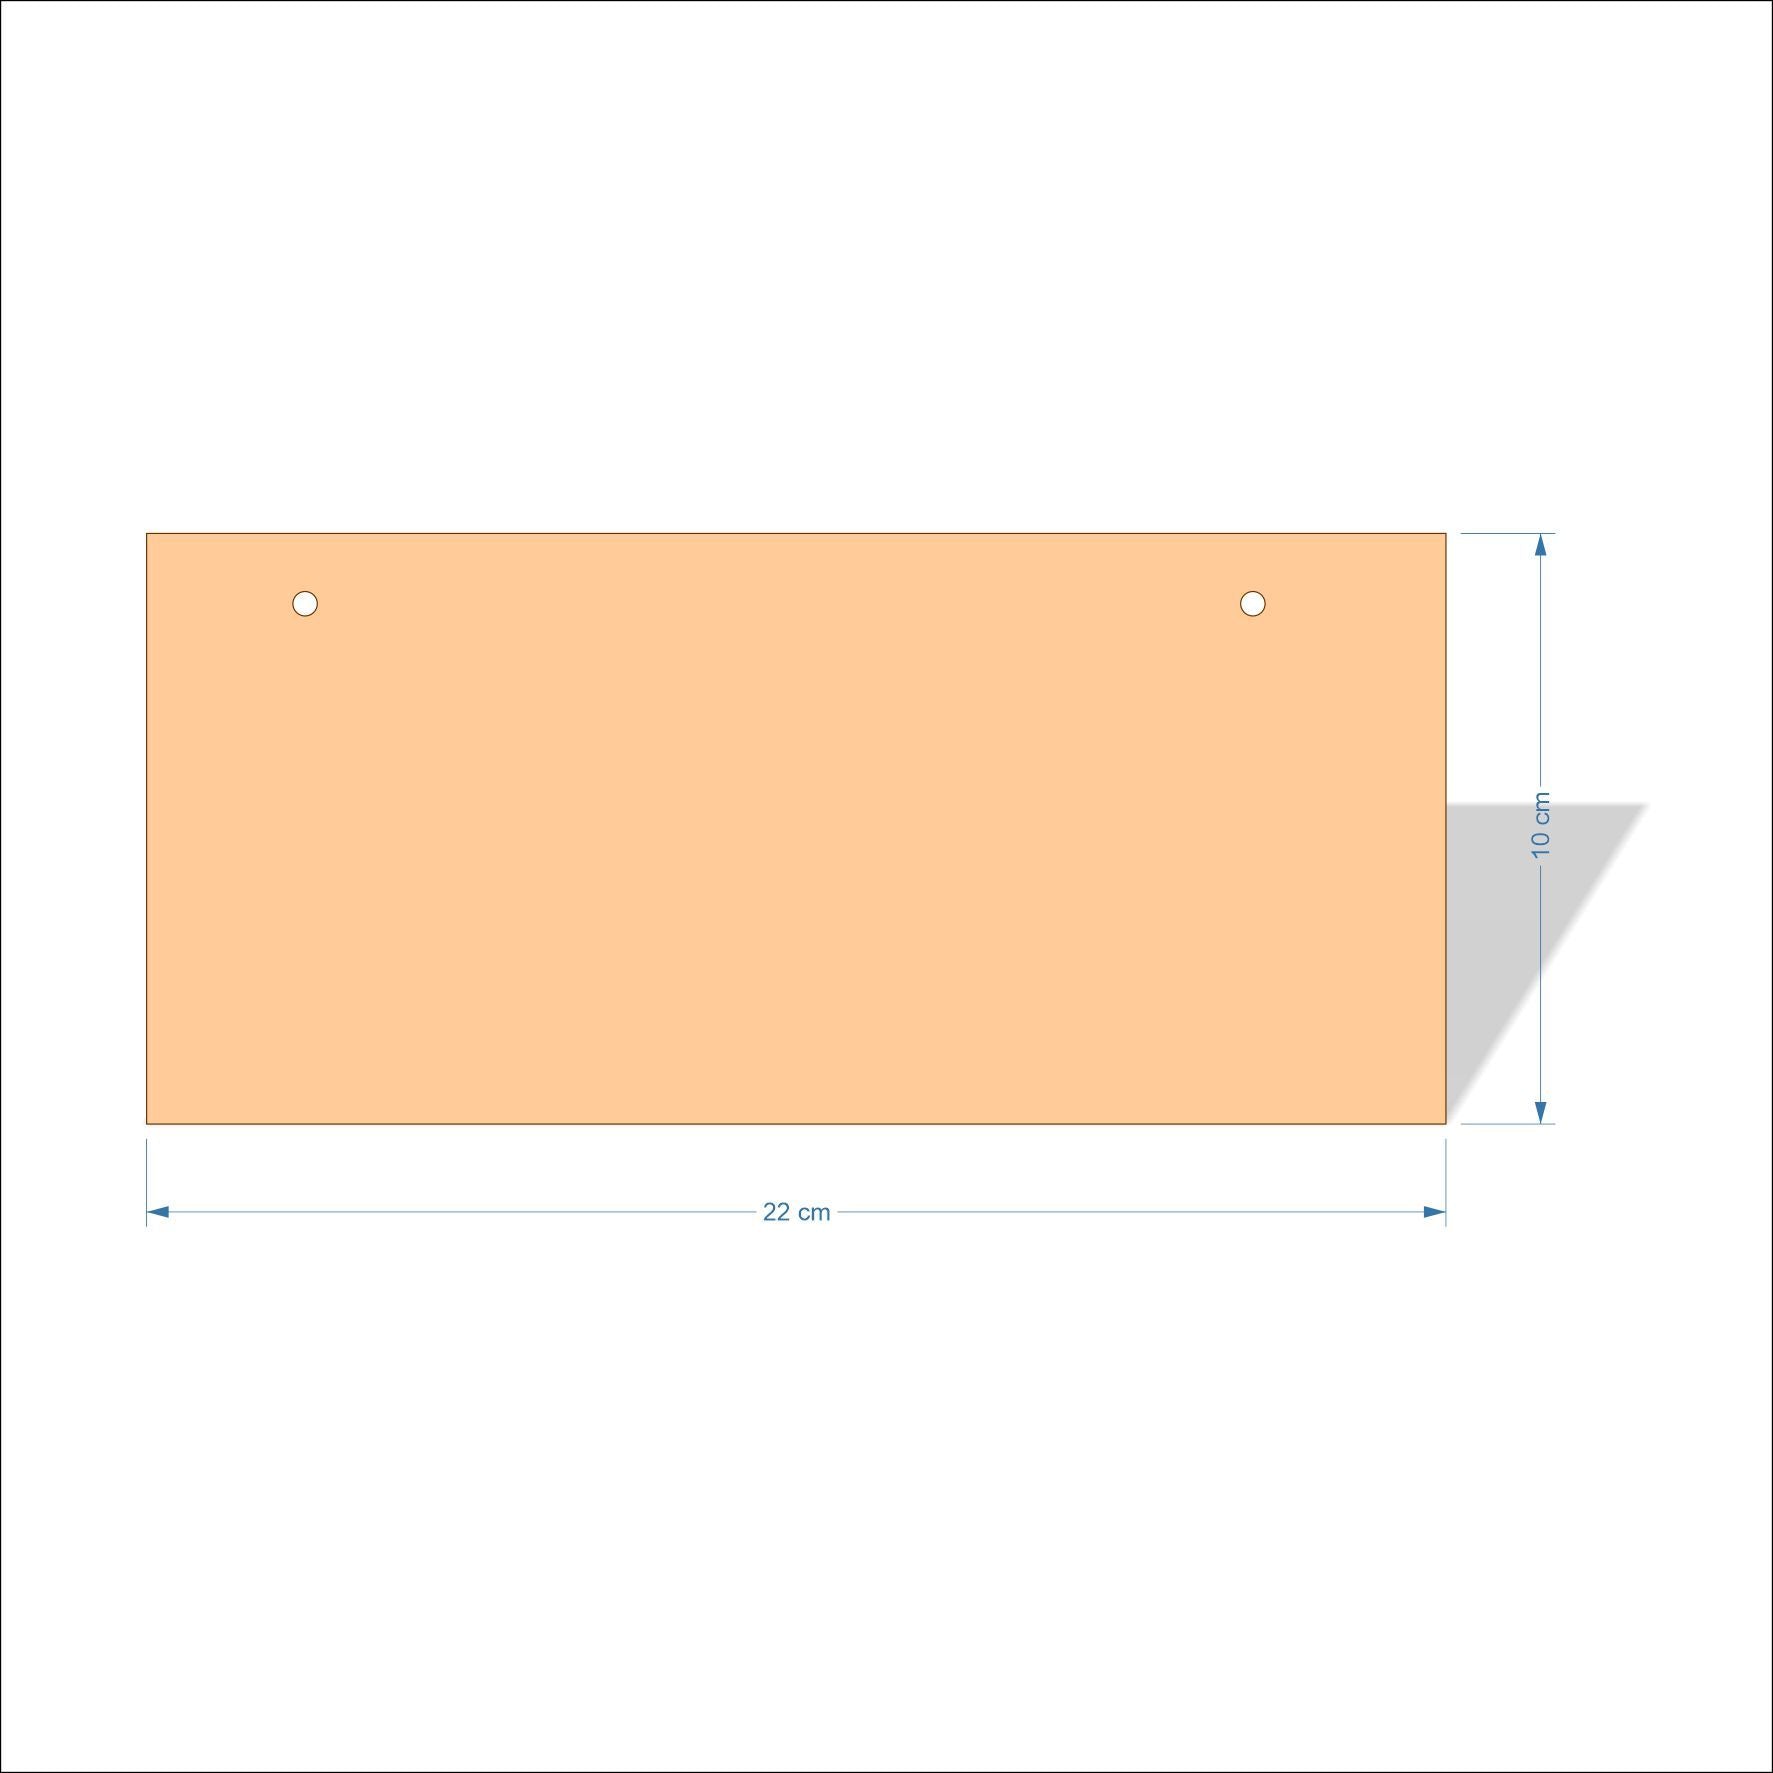 22 cm X 10 cm 3mm MDF Plaques with square corners